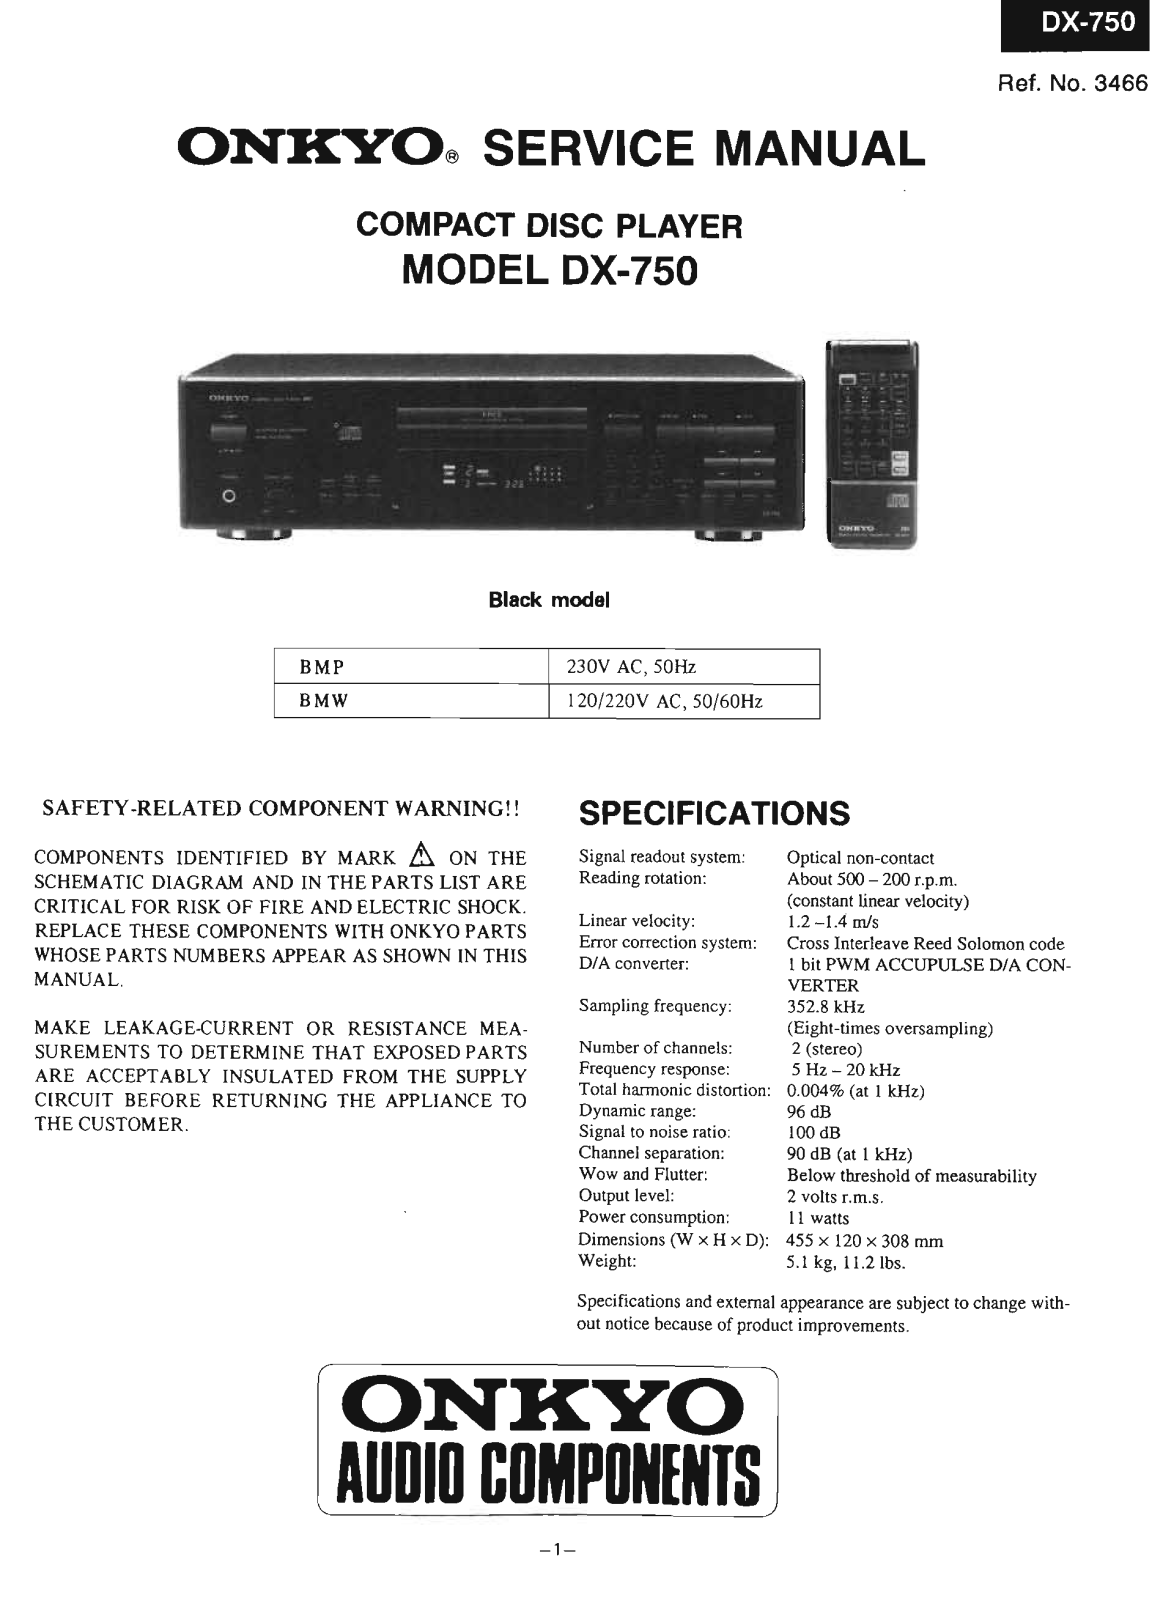 Onkyo DX-750 Service Manual